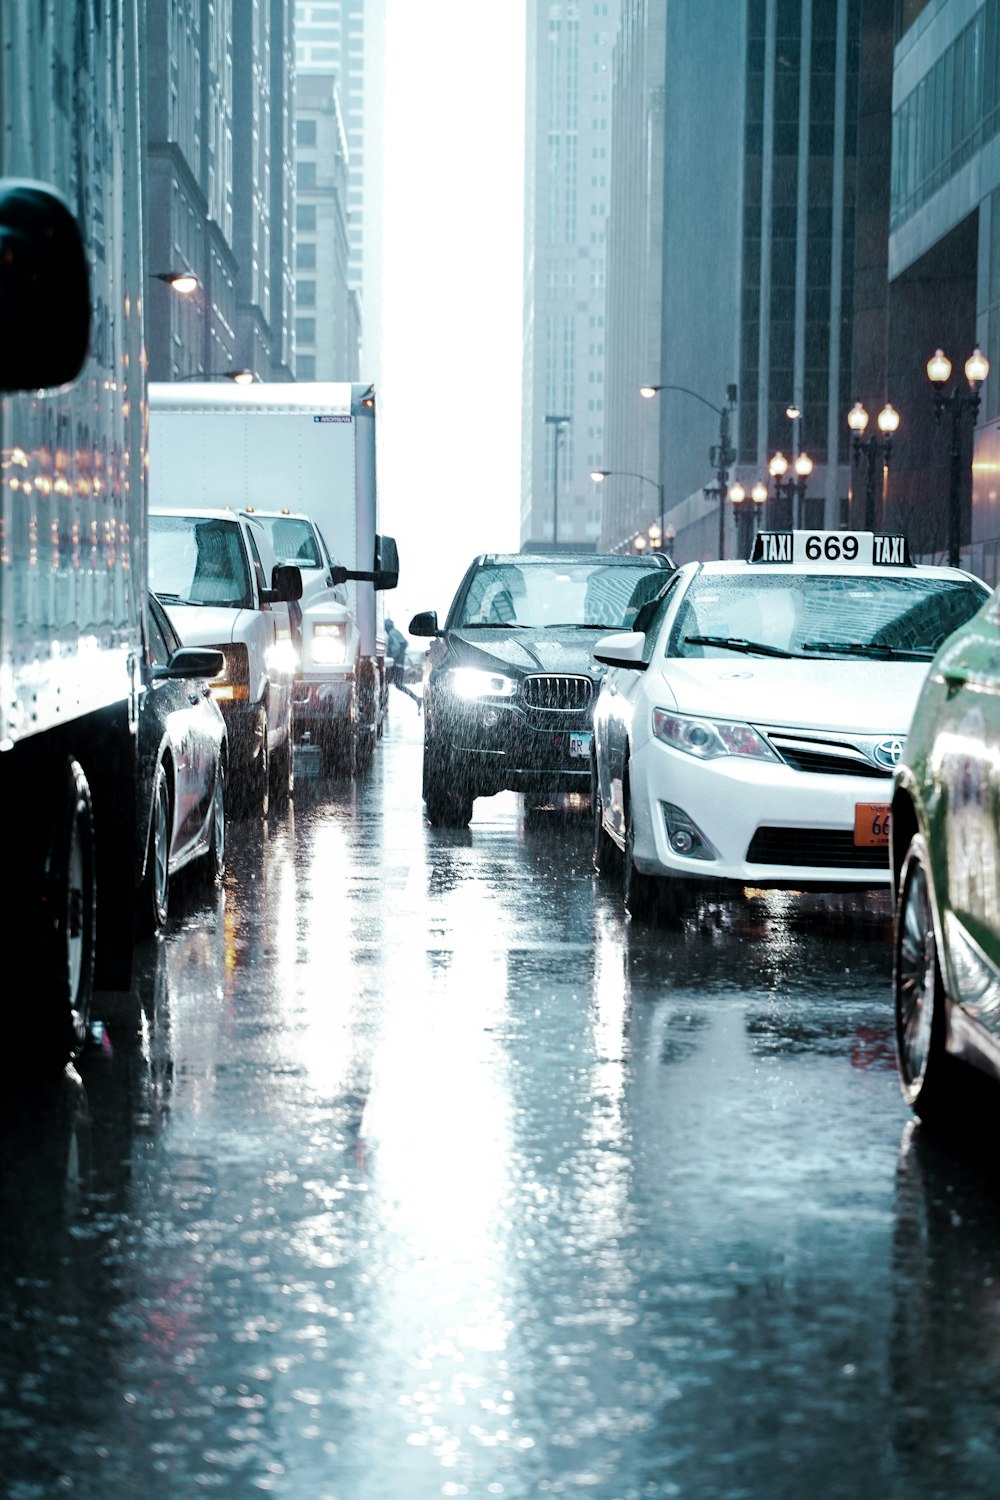 Fahrzeug steckt an regnerischem Tag im Stau fest